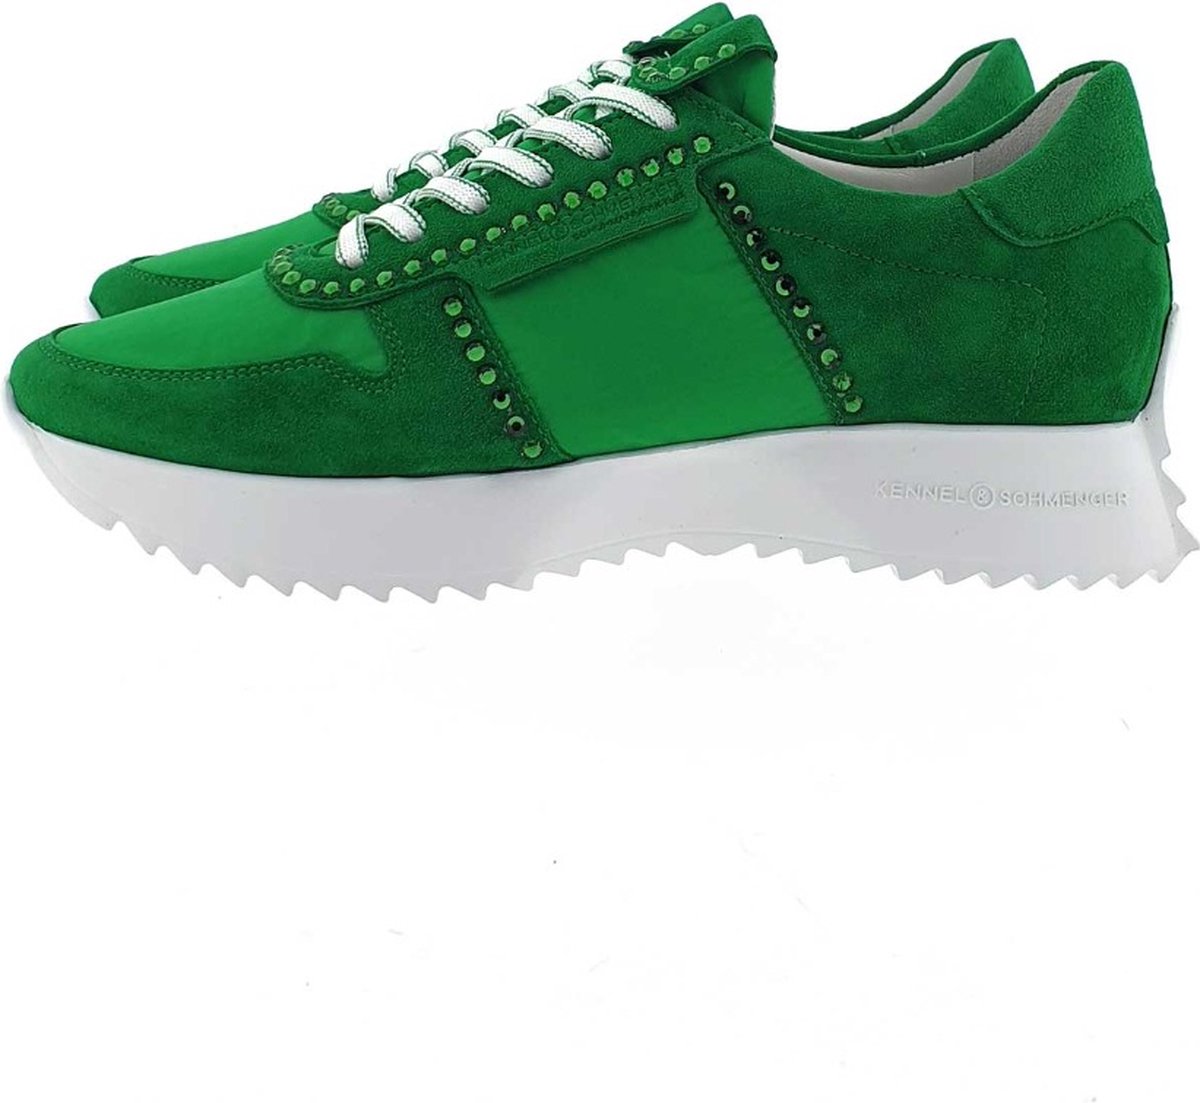 Kennel & Schmenger 18070 sneaker met strass groen, 40 / 6.5